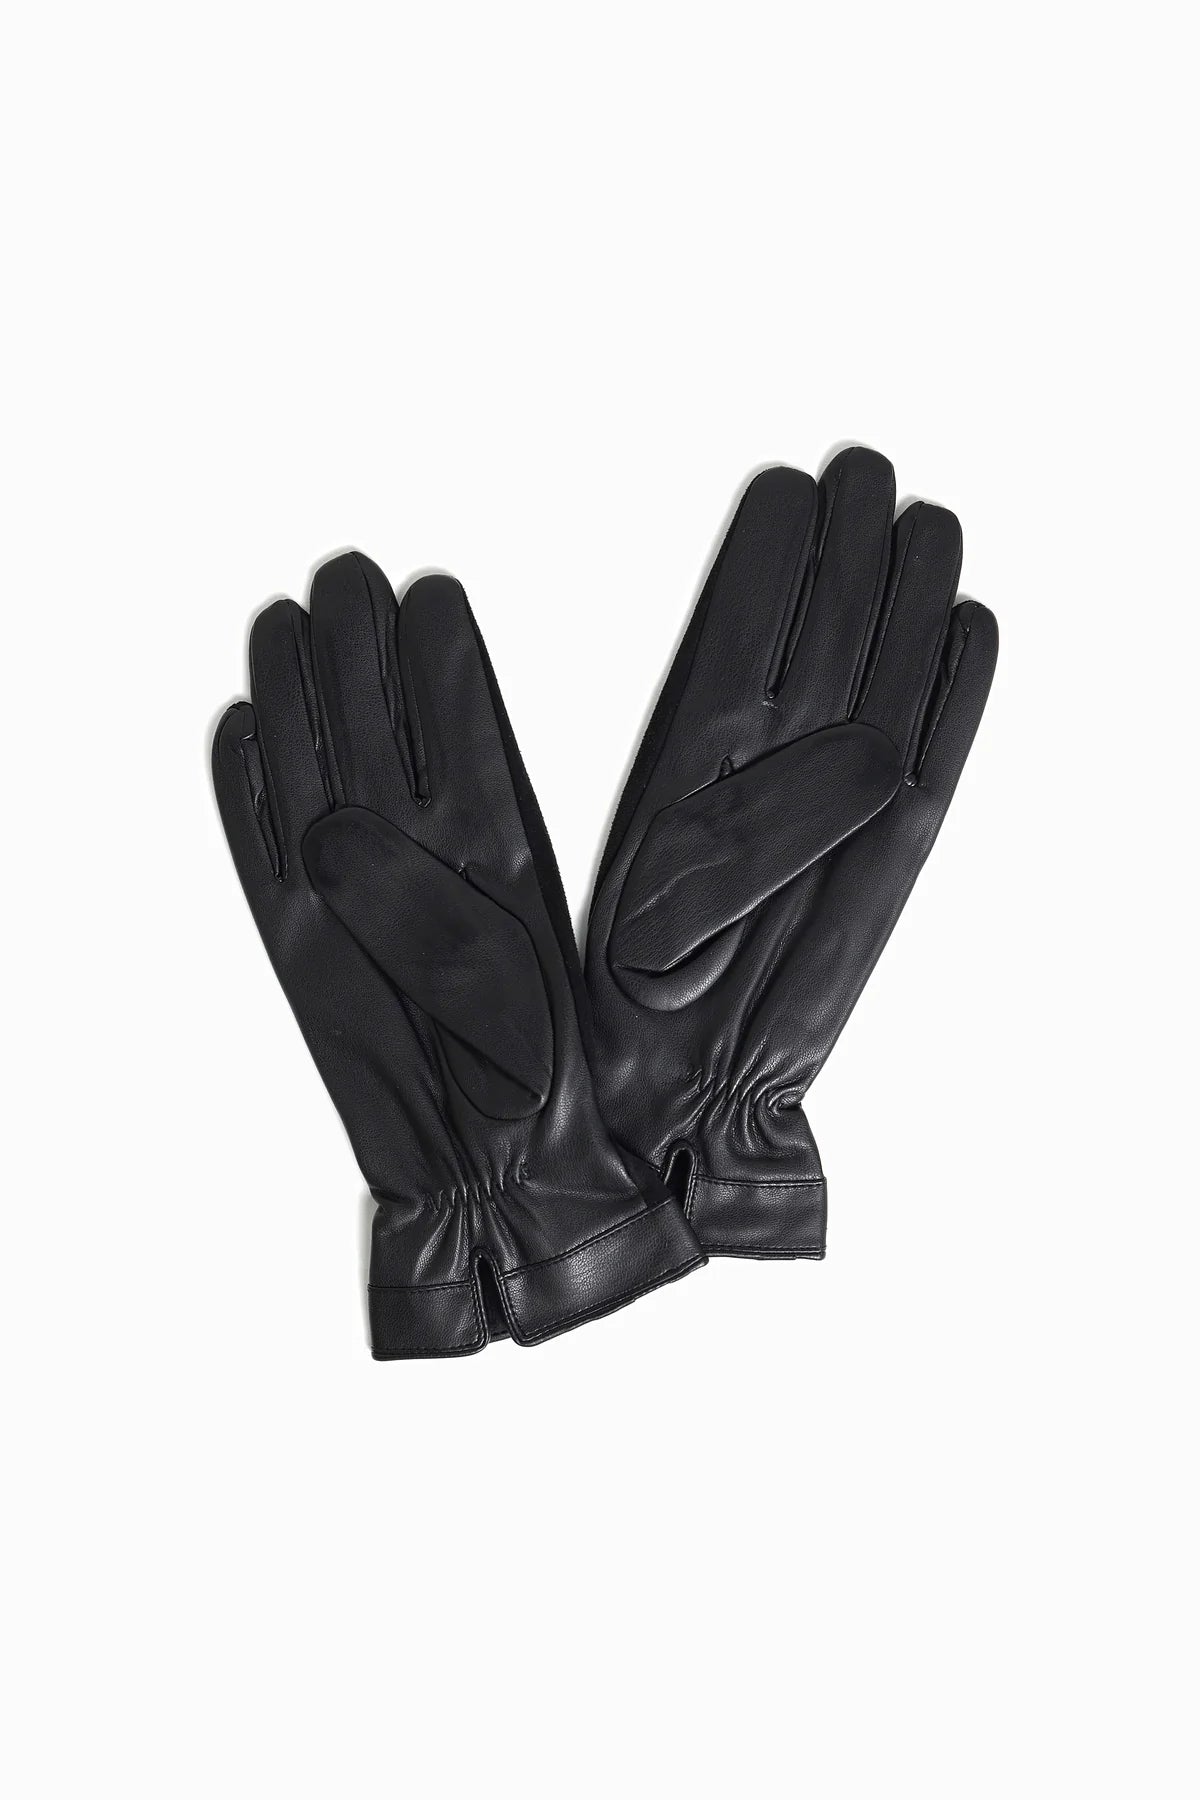 The Vegan Leather Glove